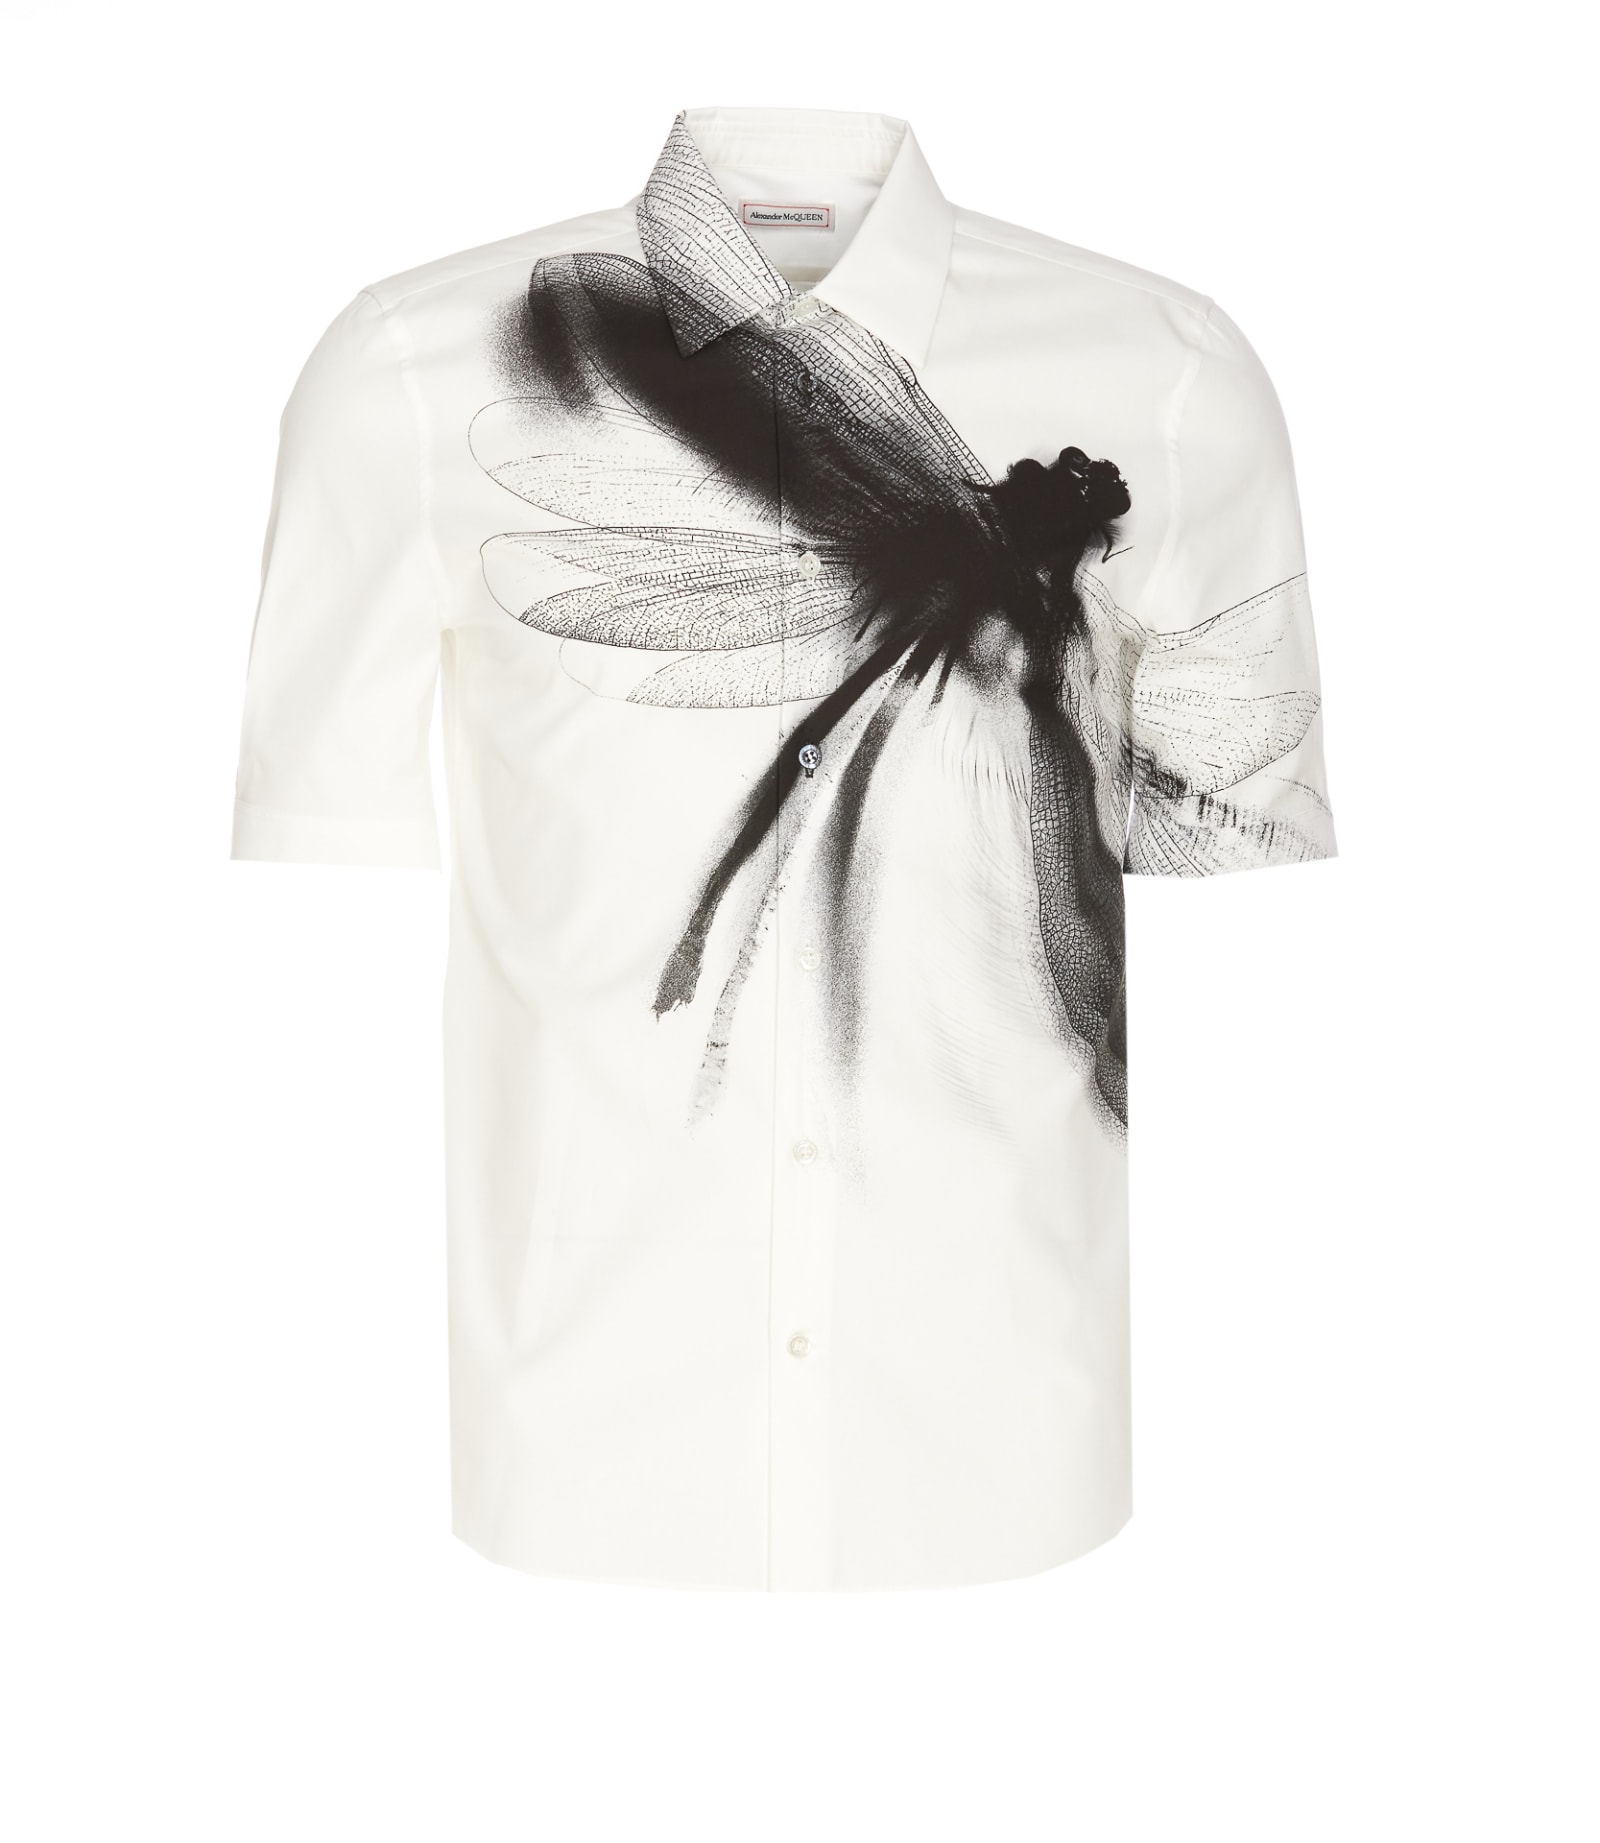 Dragonfly Shirt